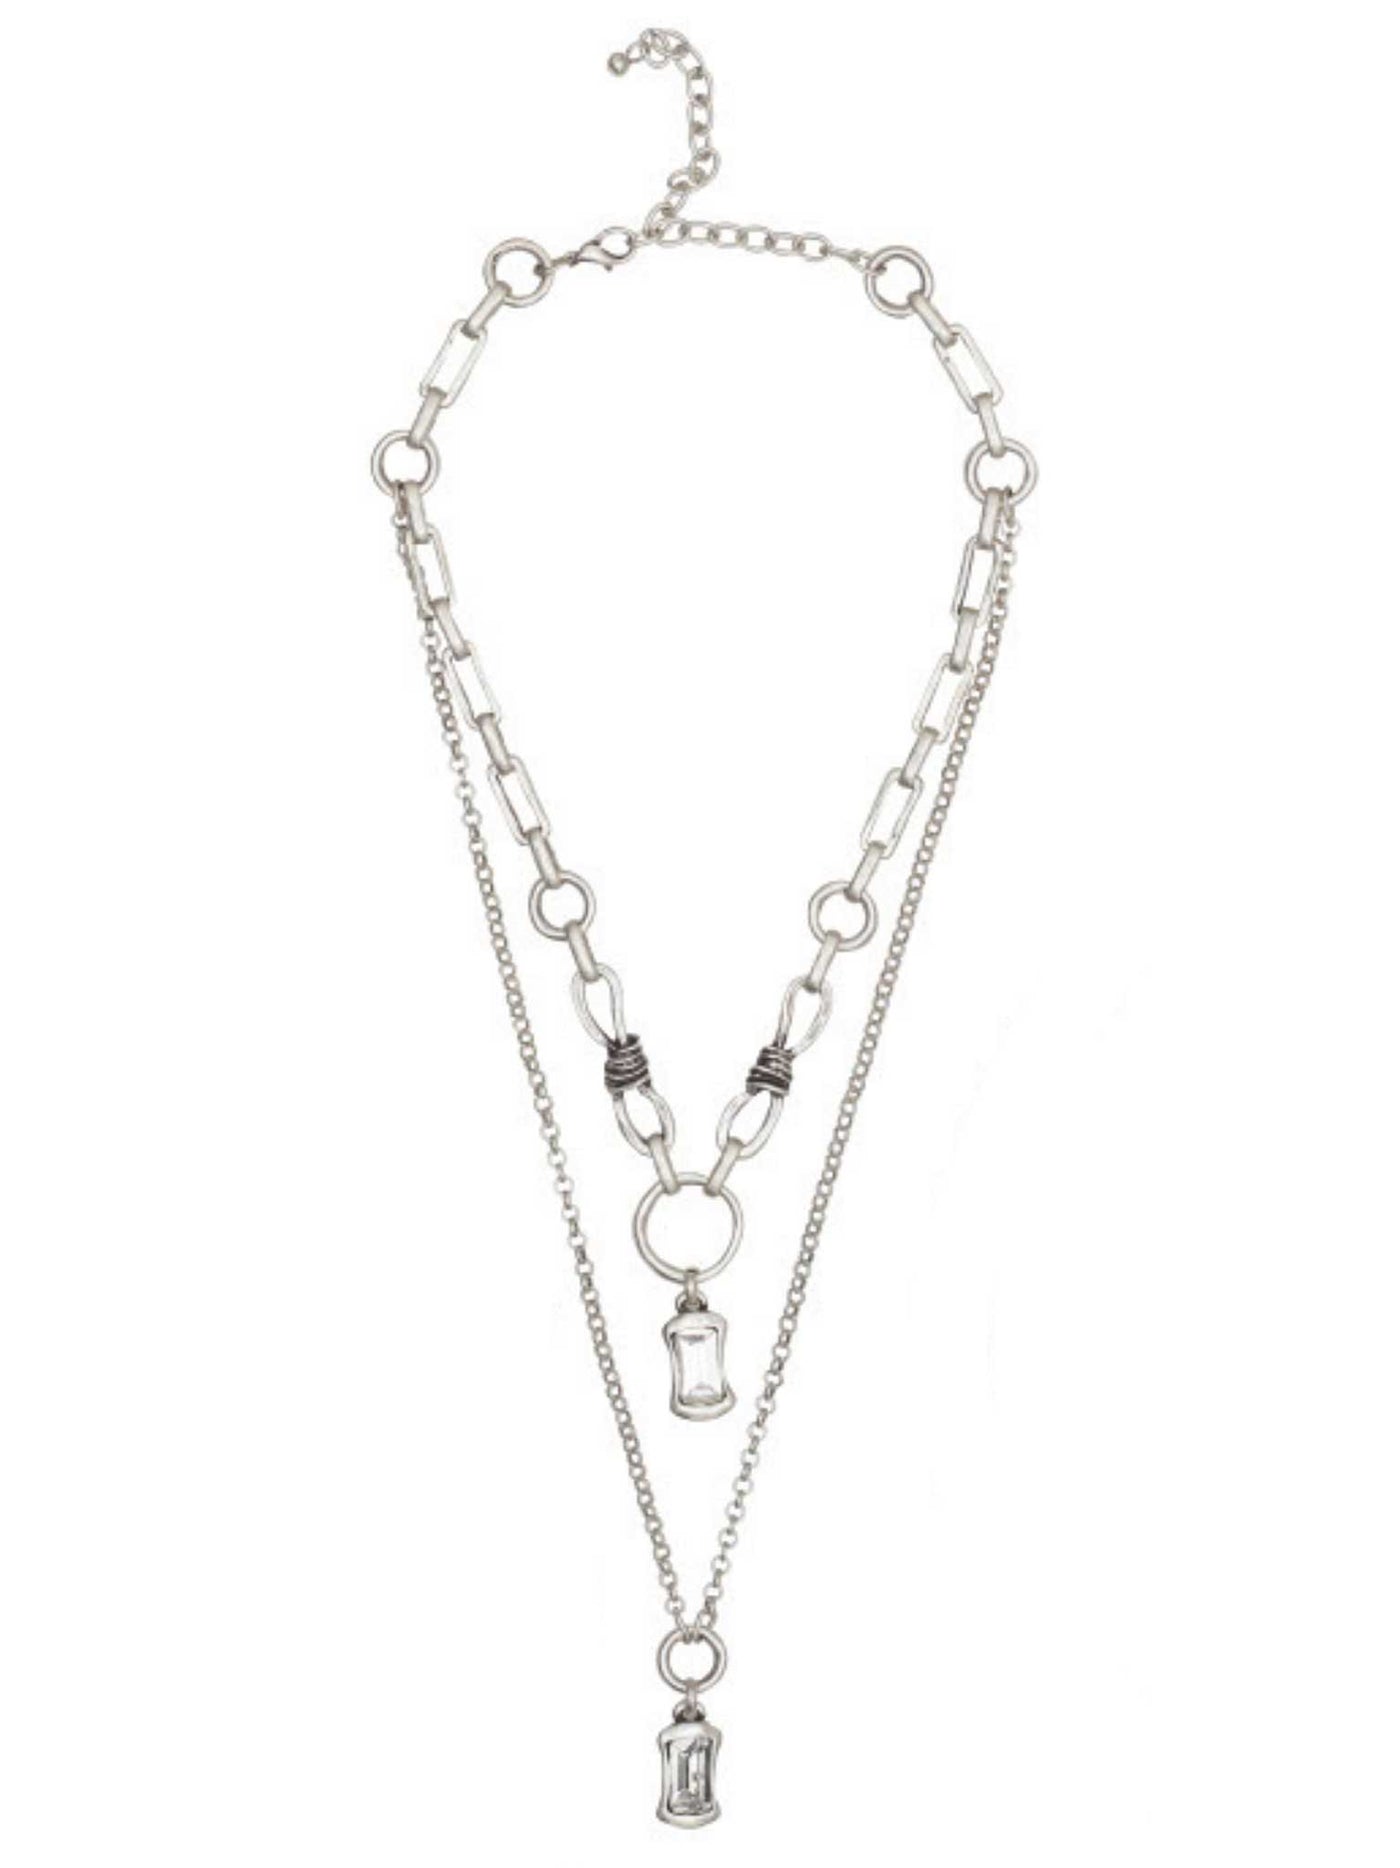 Caroline Layered Chainlink Necklace